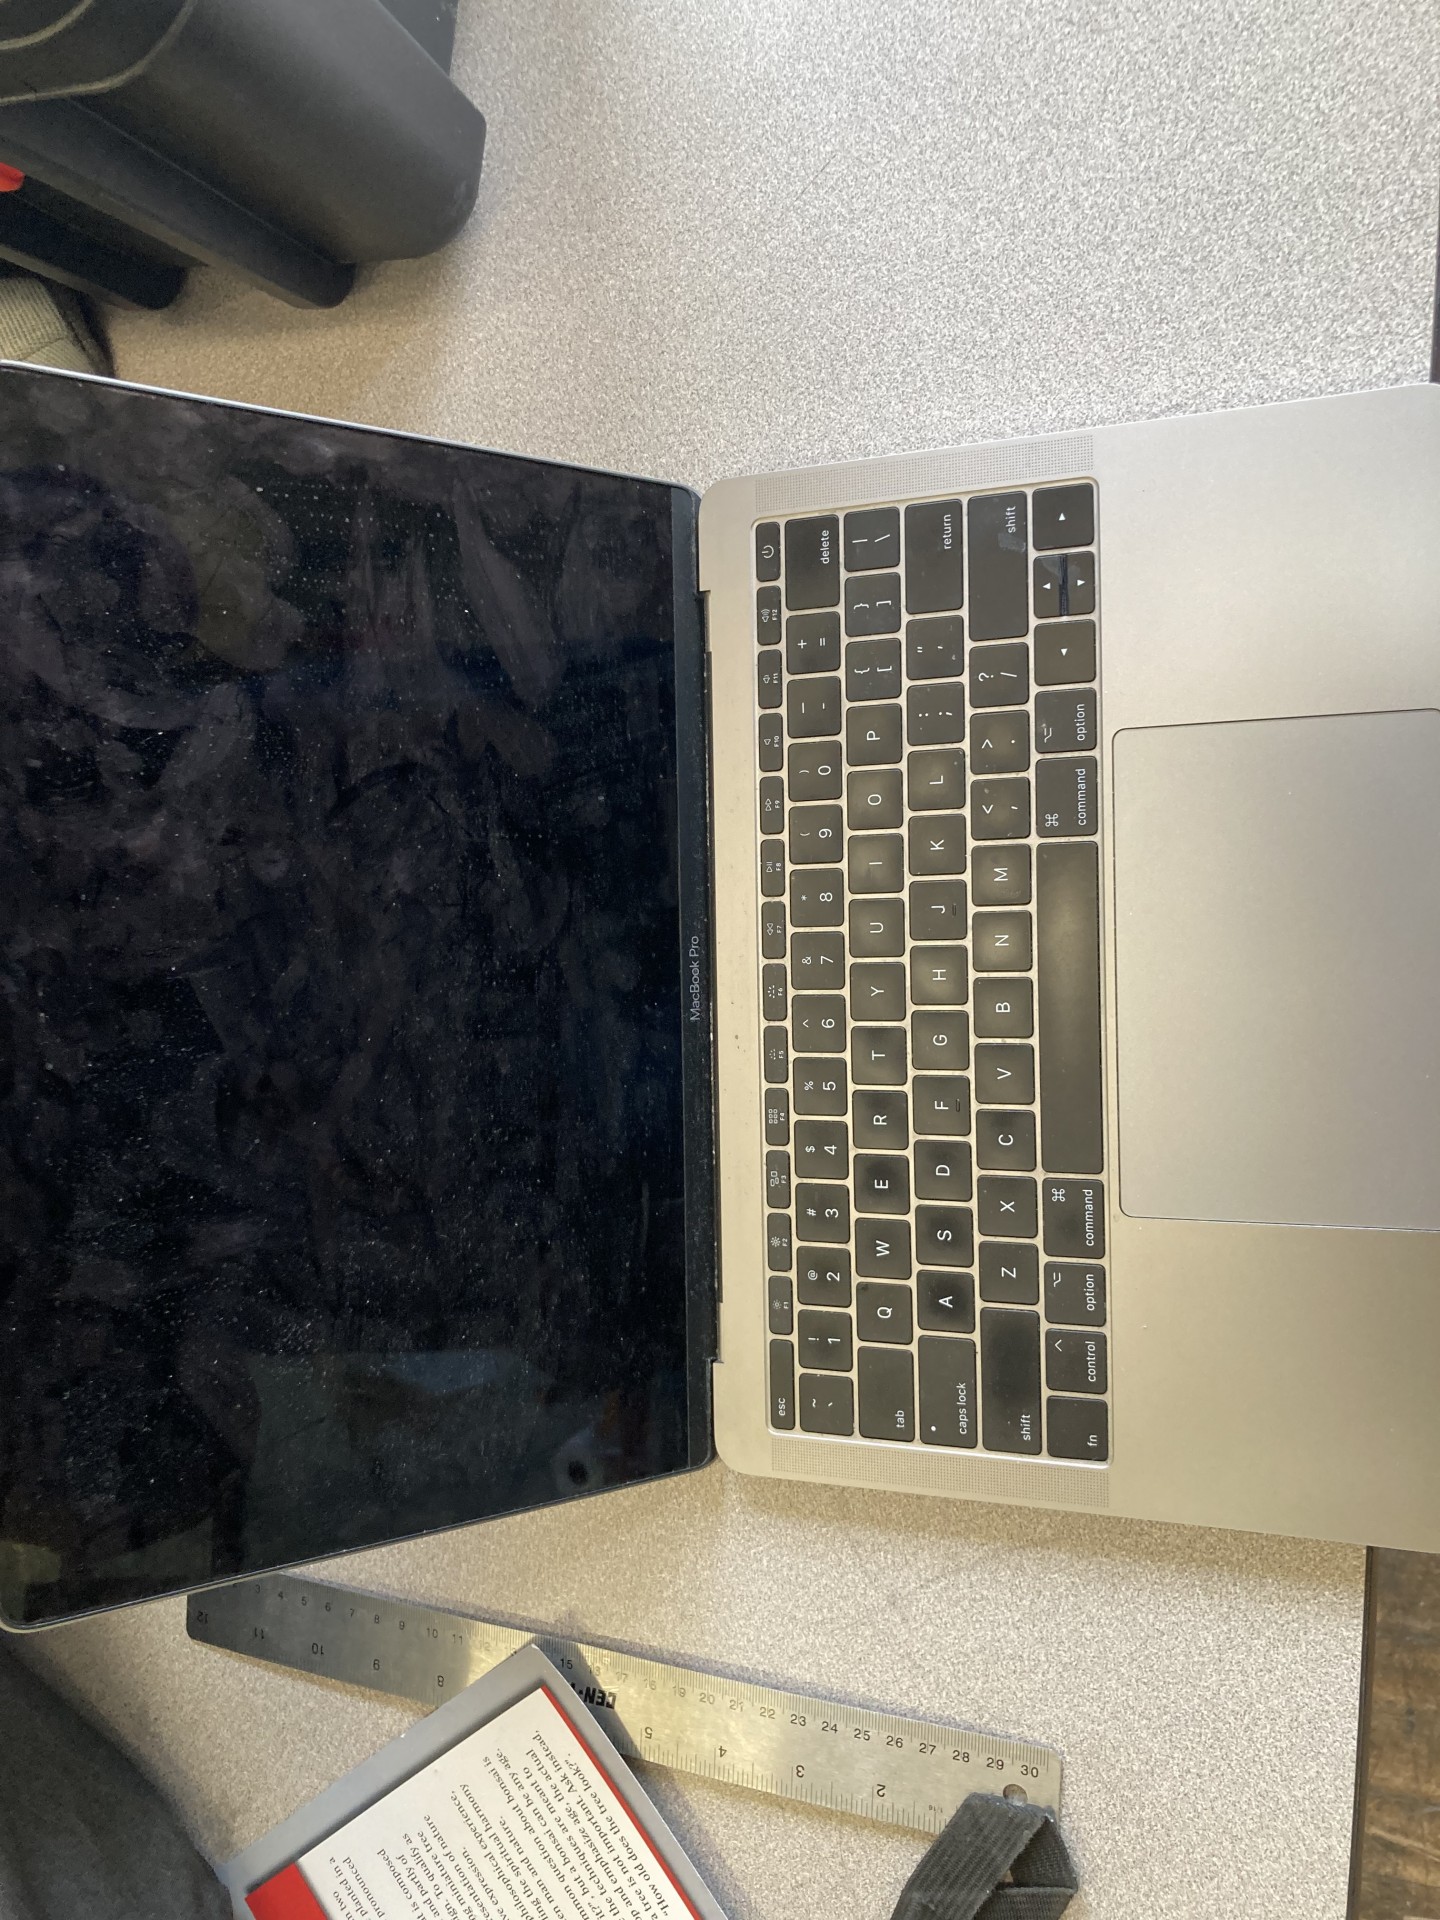 A Dirty MacBook